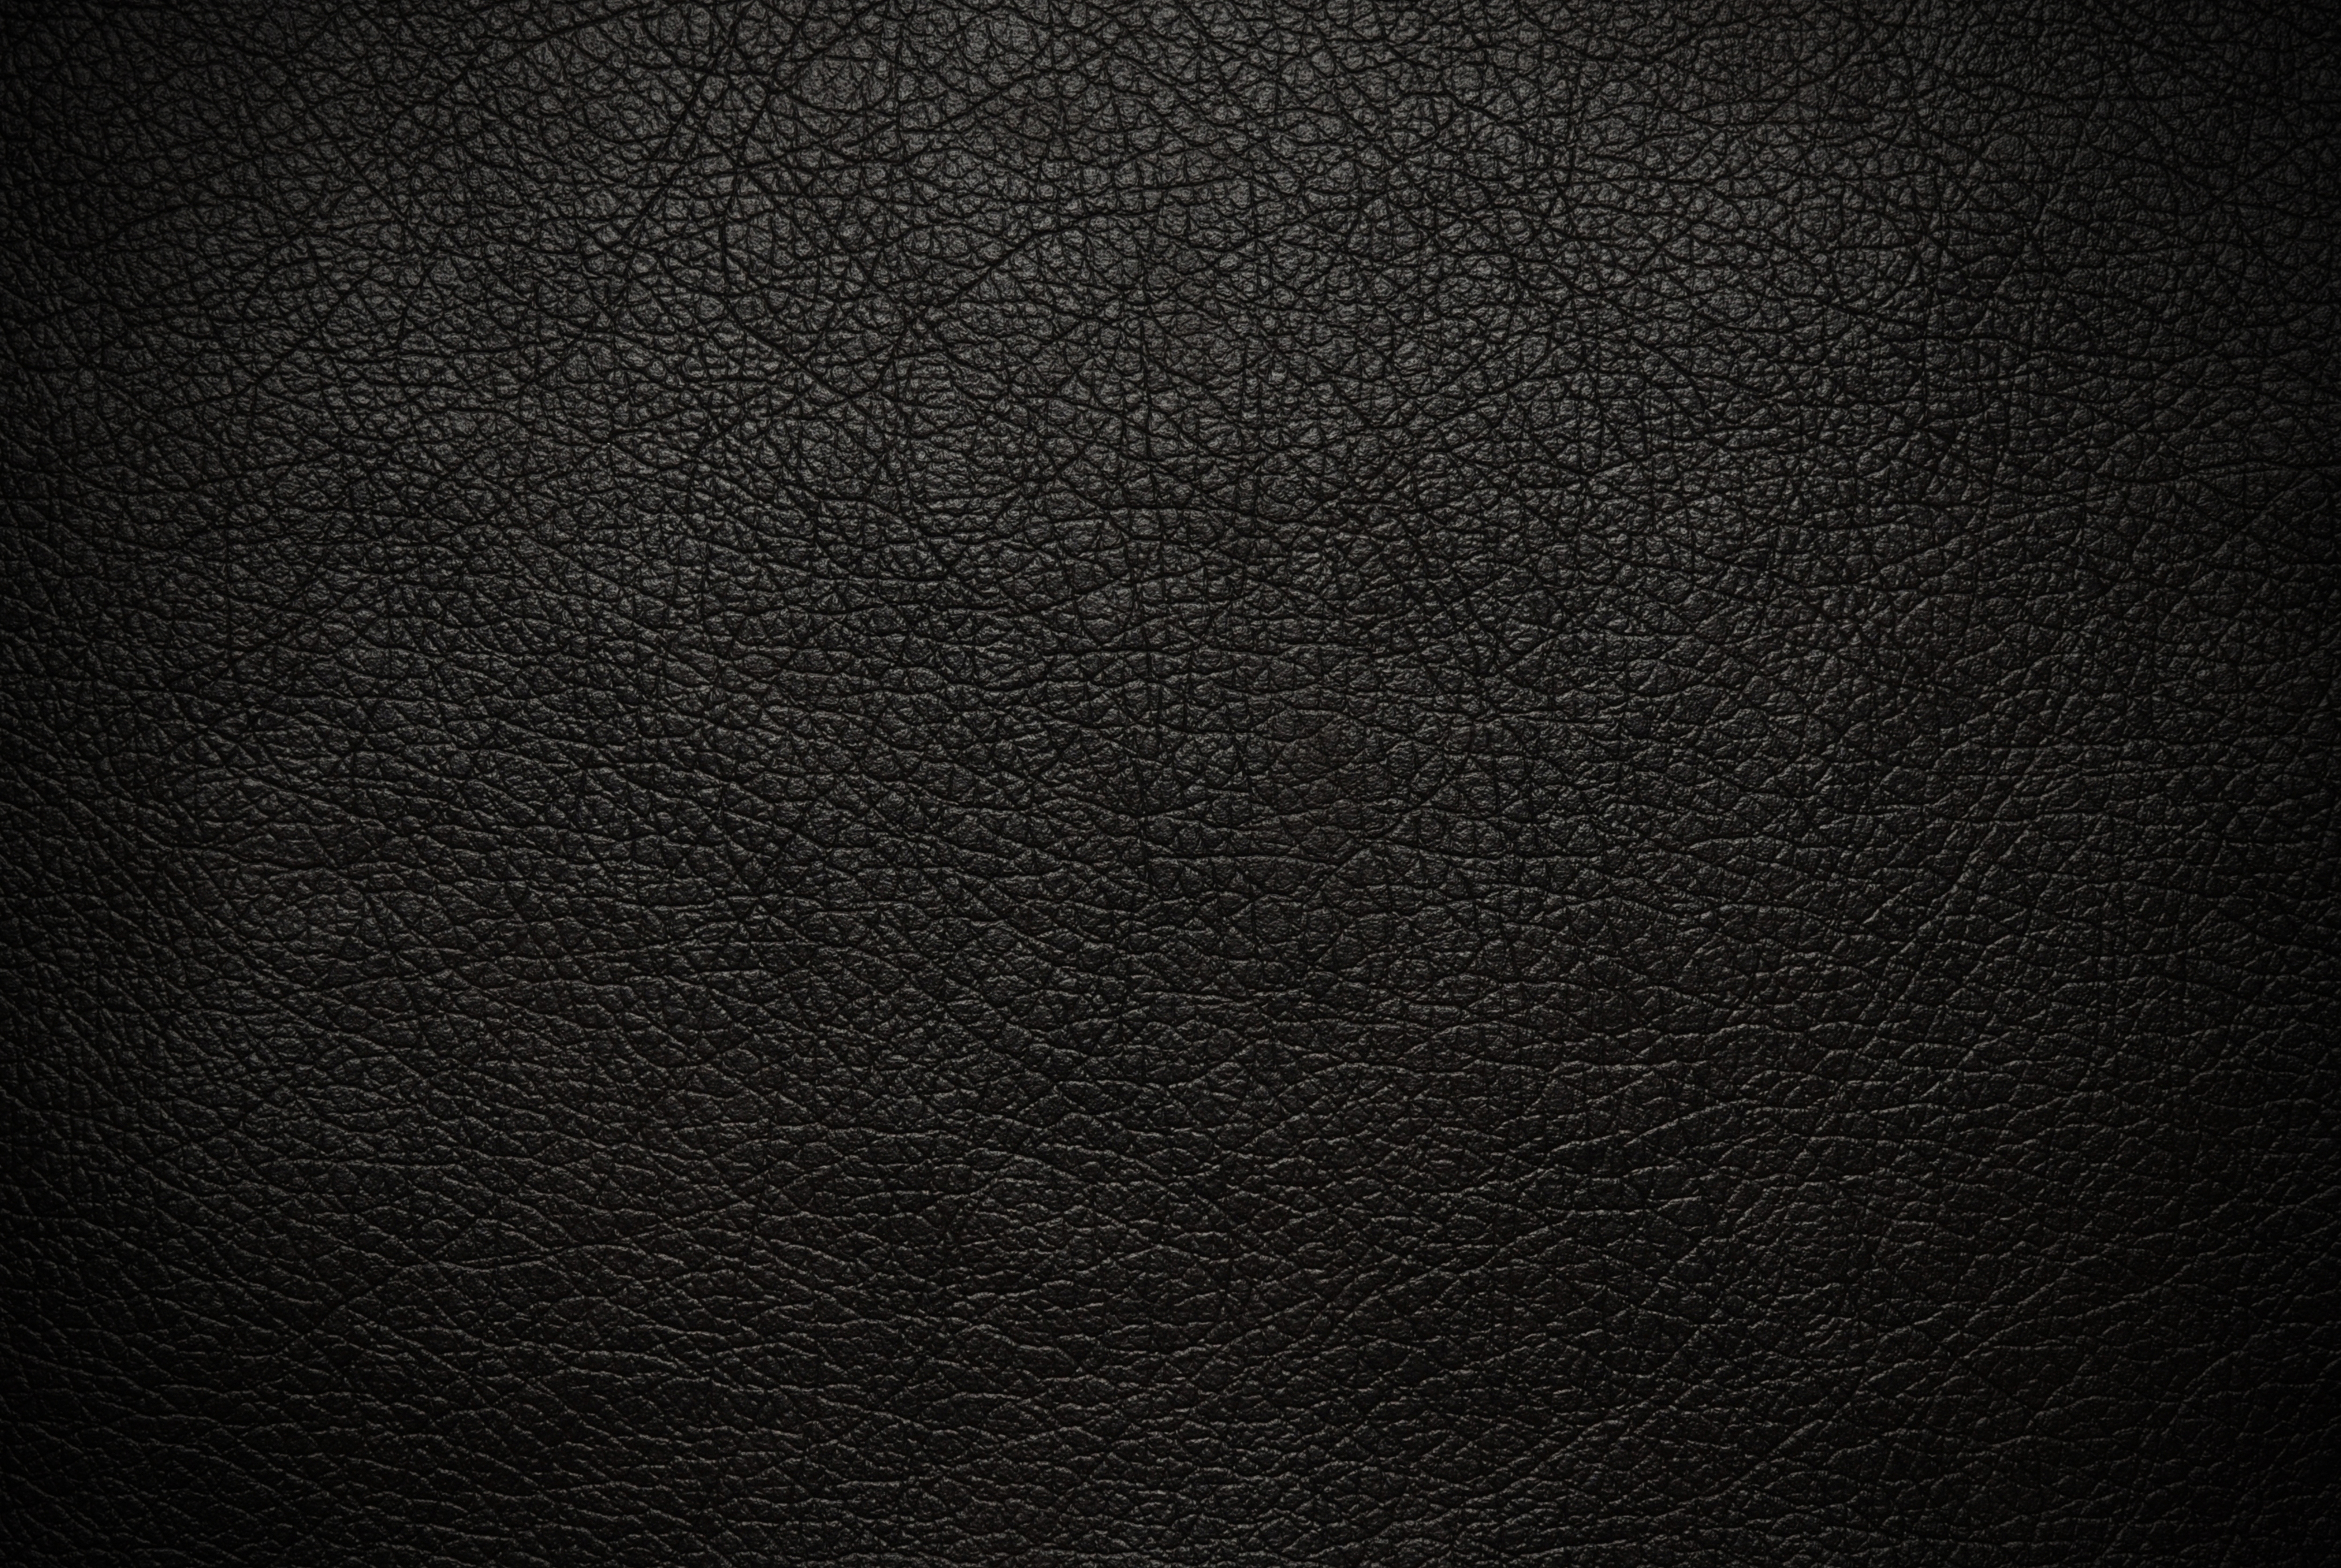 Leather black cracked background texture wallpaper   ForWallpaper